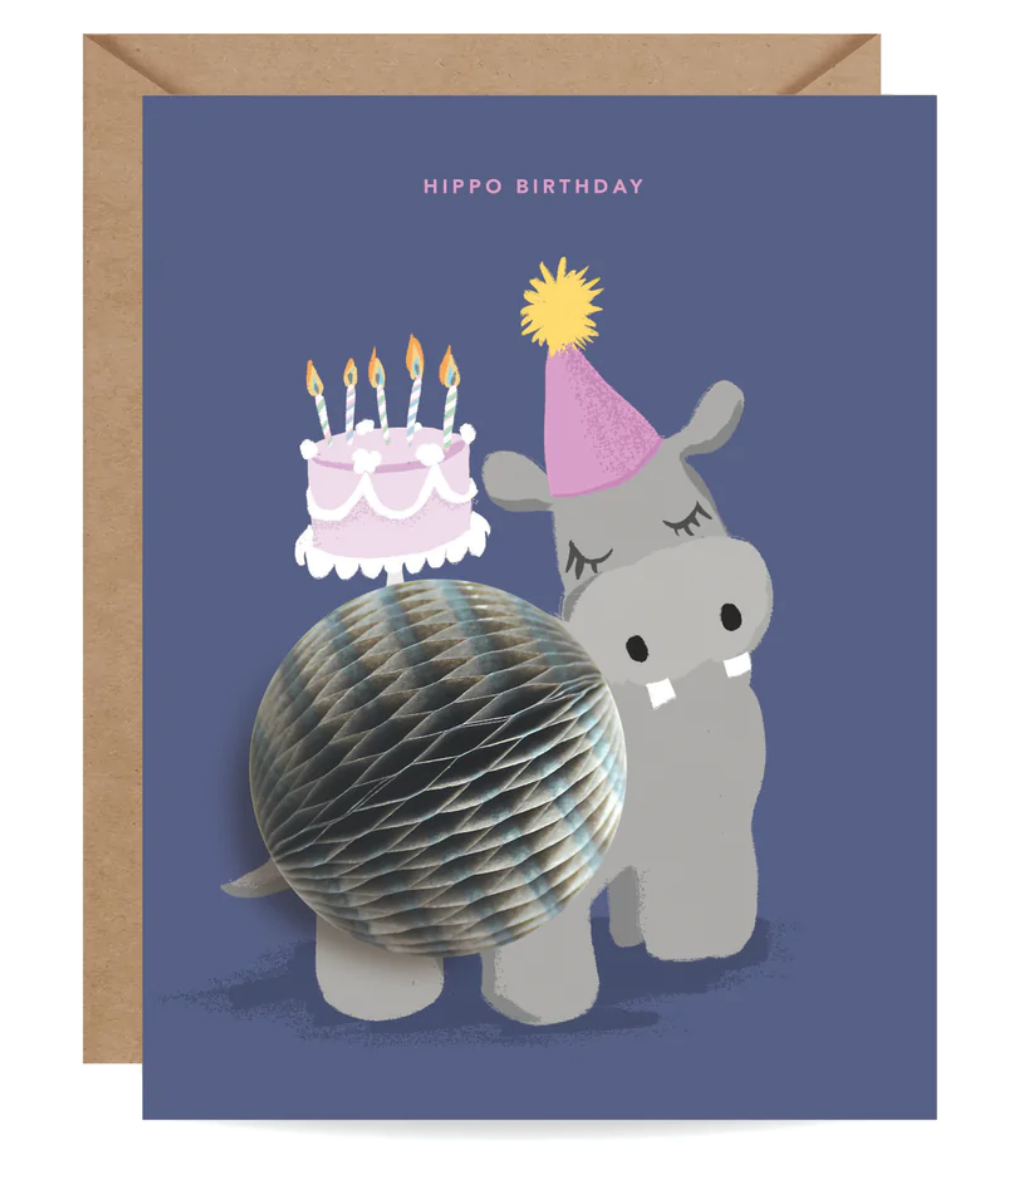 Hippo Birthday Pop-up Card